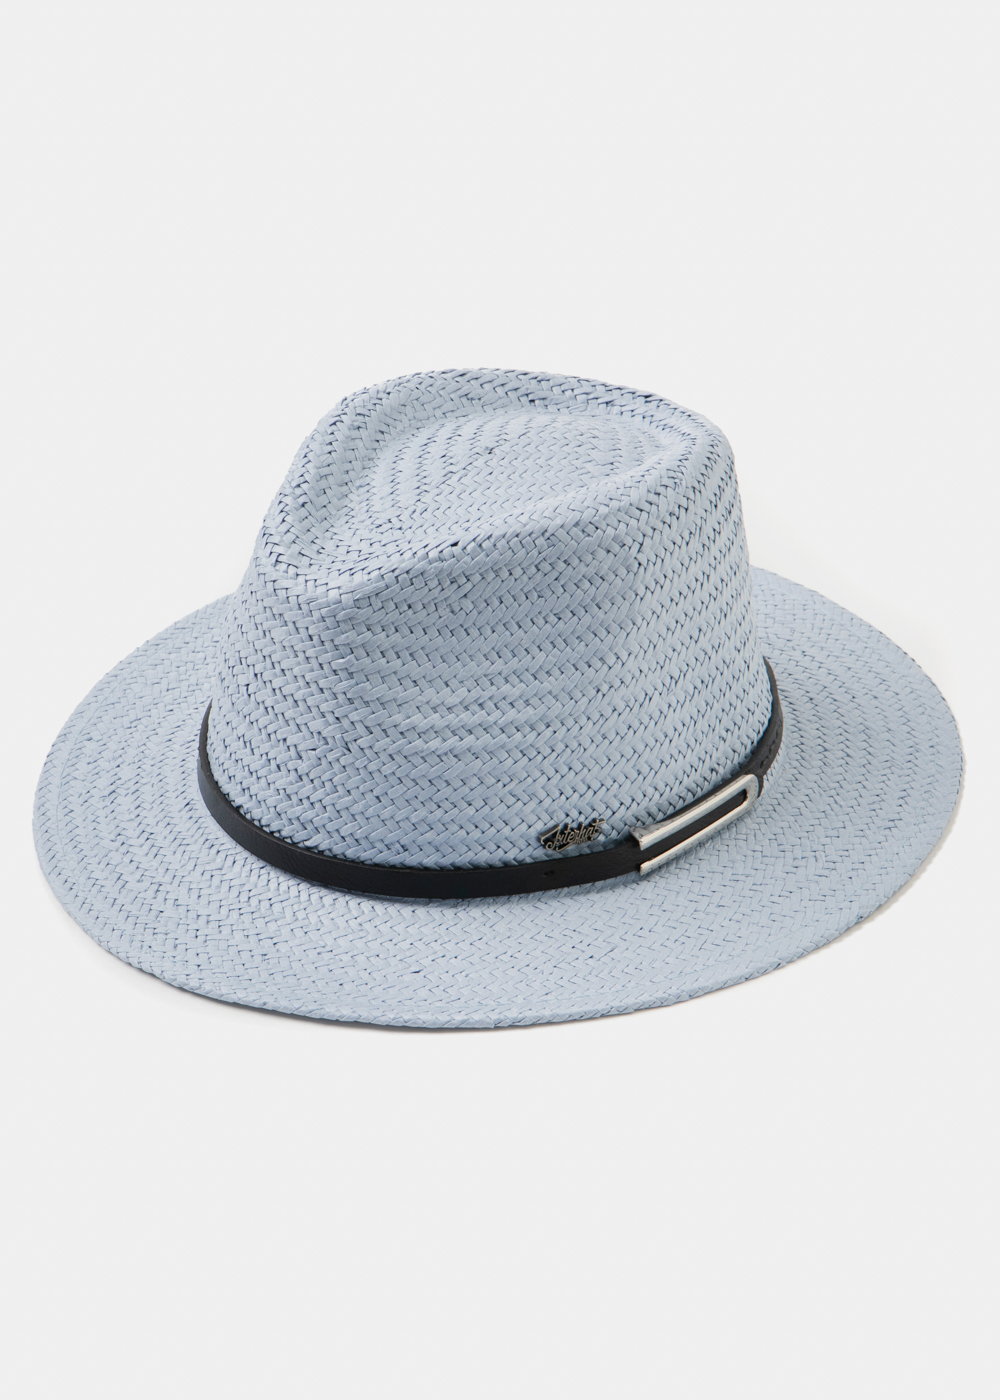 Light Blue Panama Style Hat w/ black leather belt